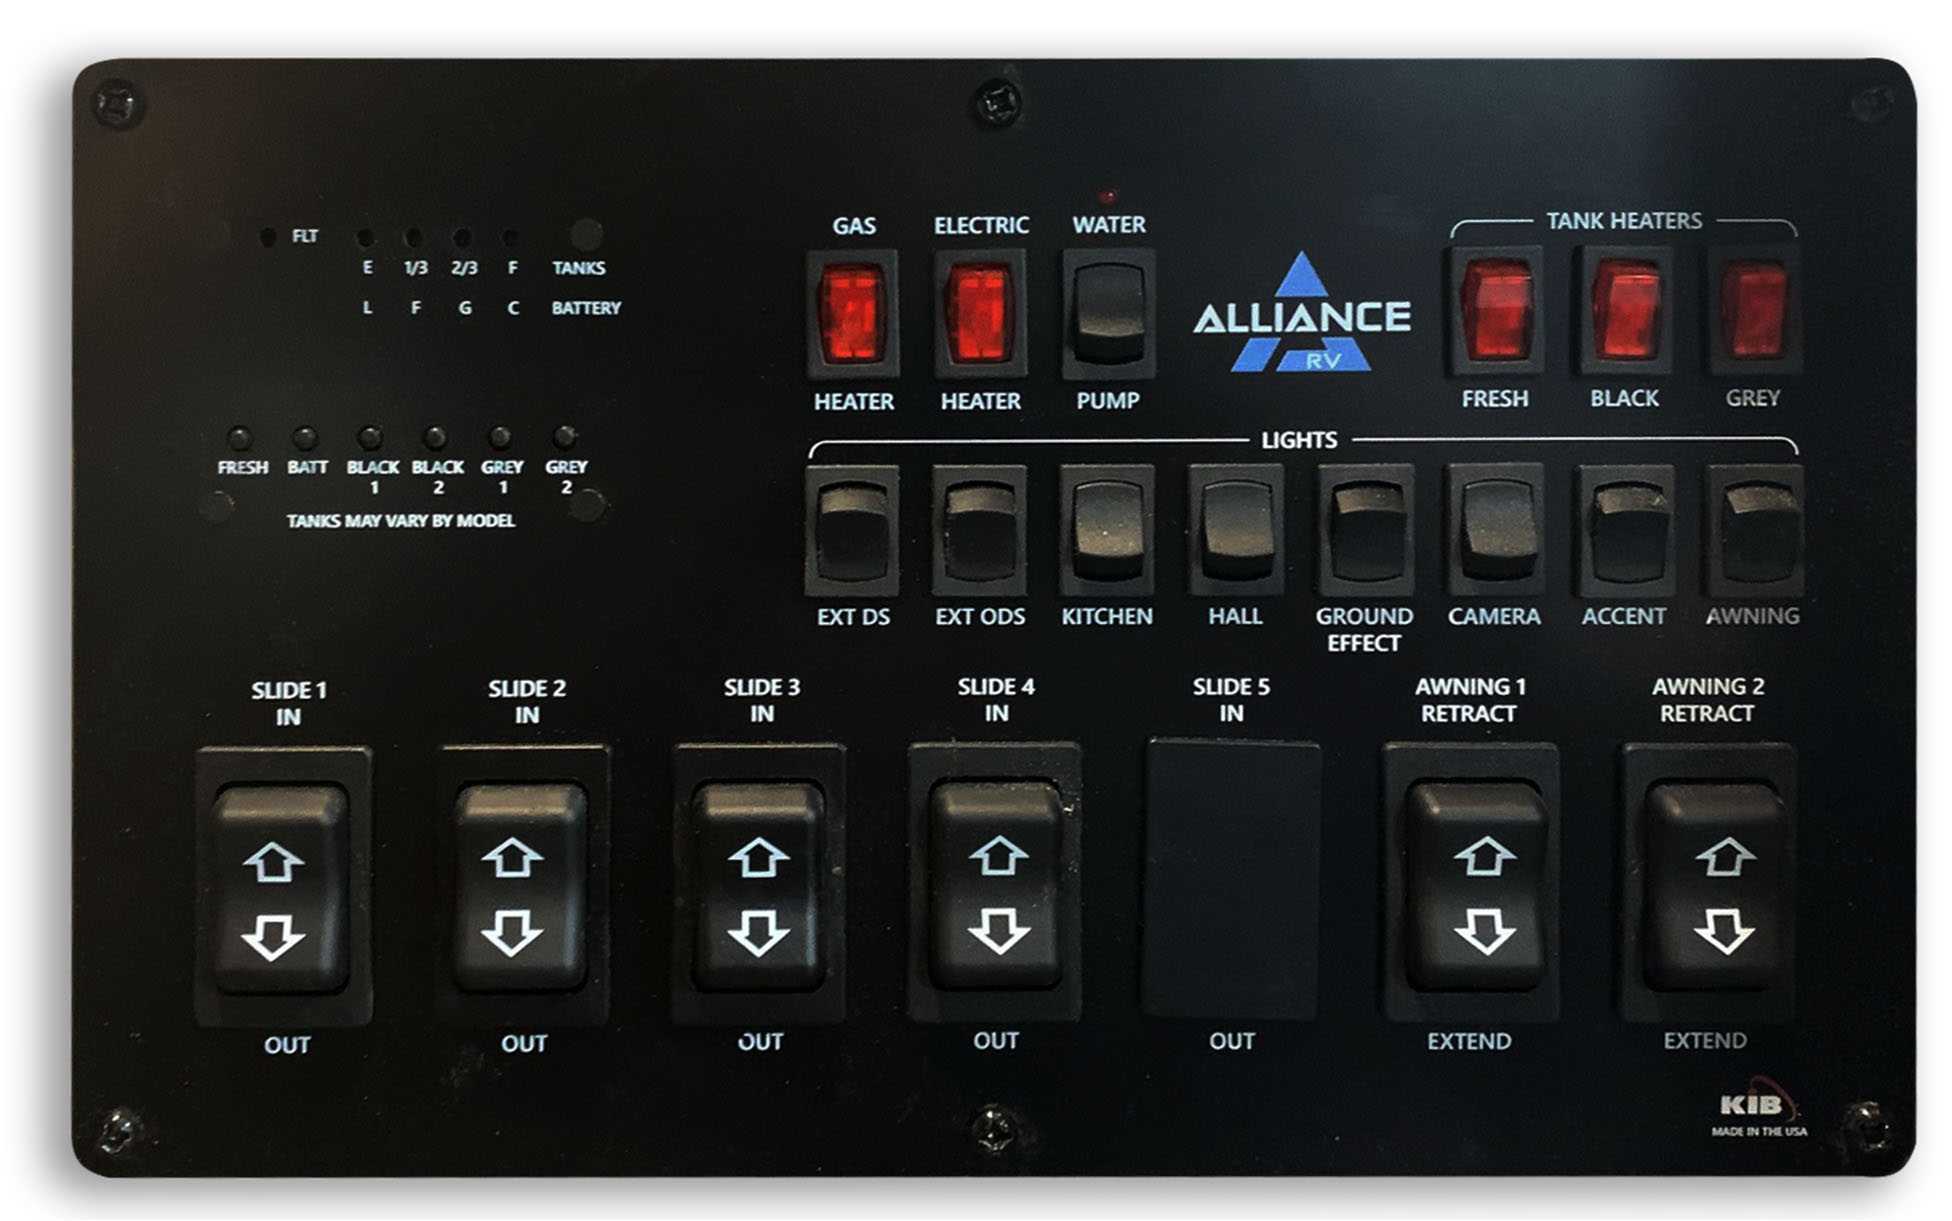 alliance RV Valor 2021 Televisions User Manual 01